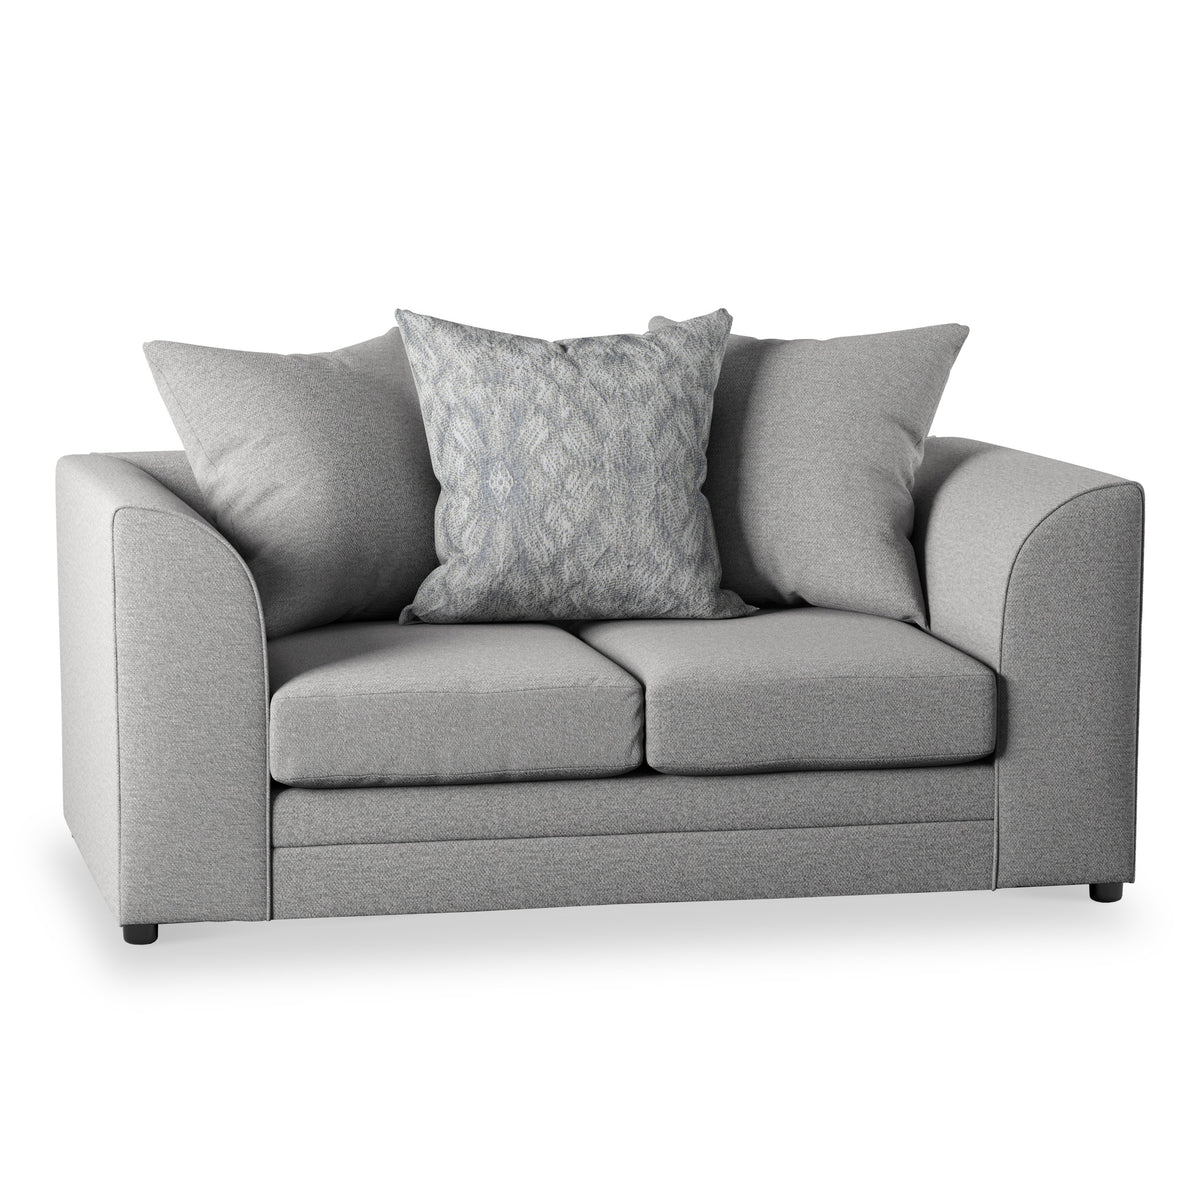 Tisha Grey 2 Seater Sofa from Roseland Furniture